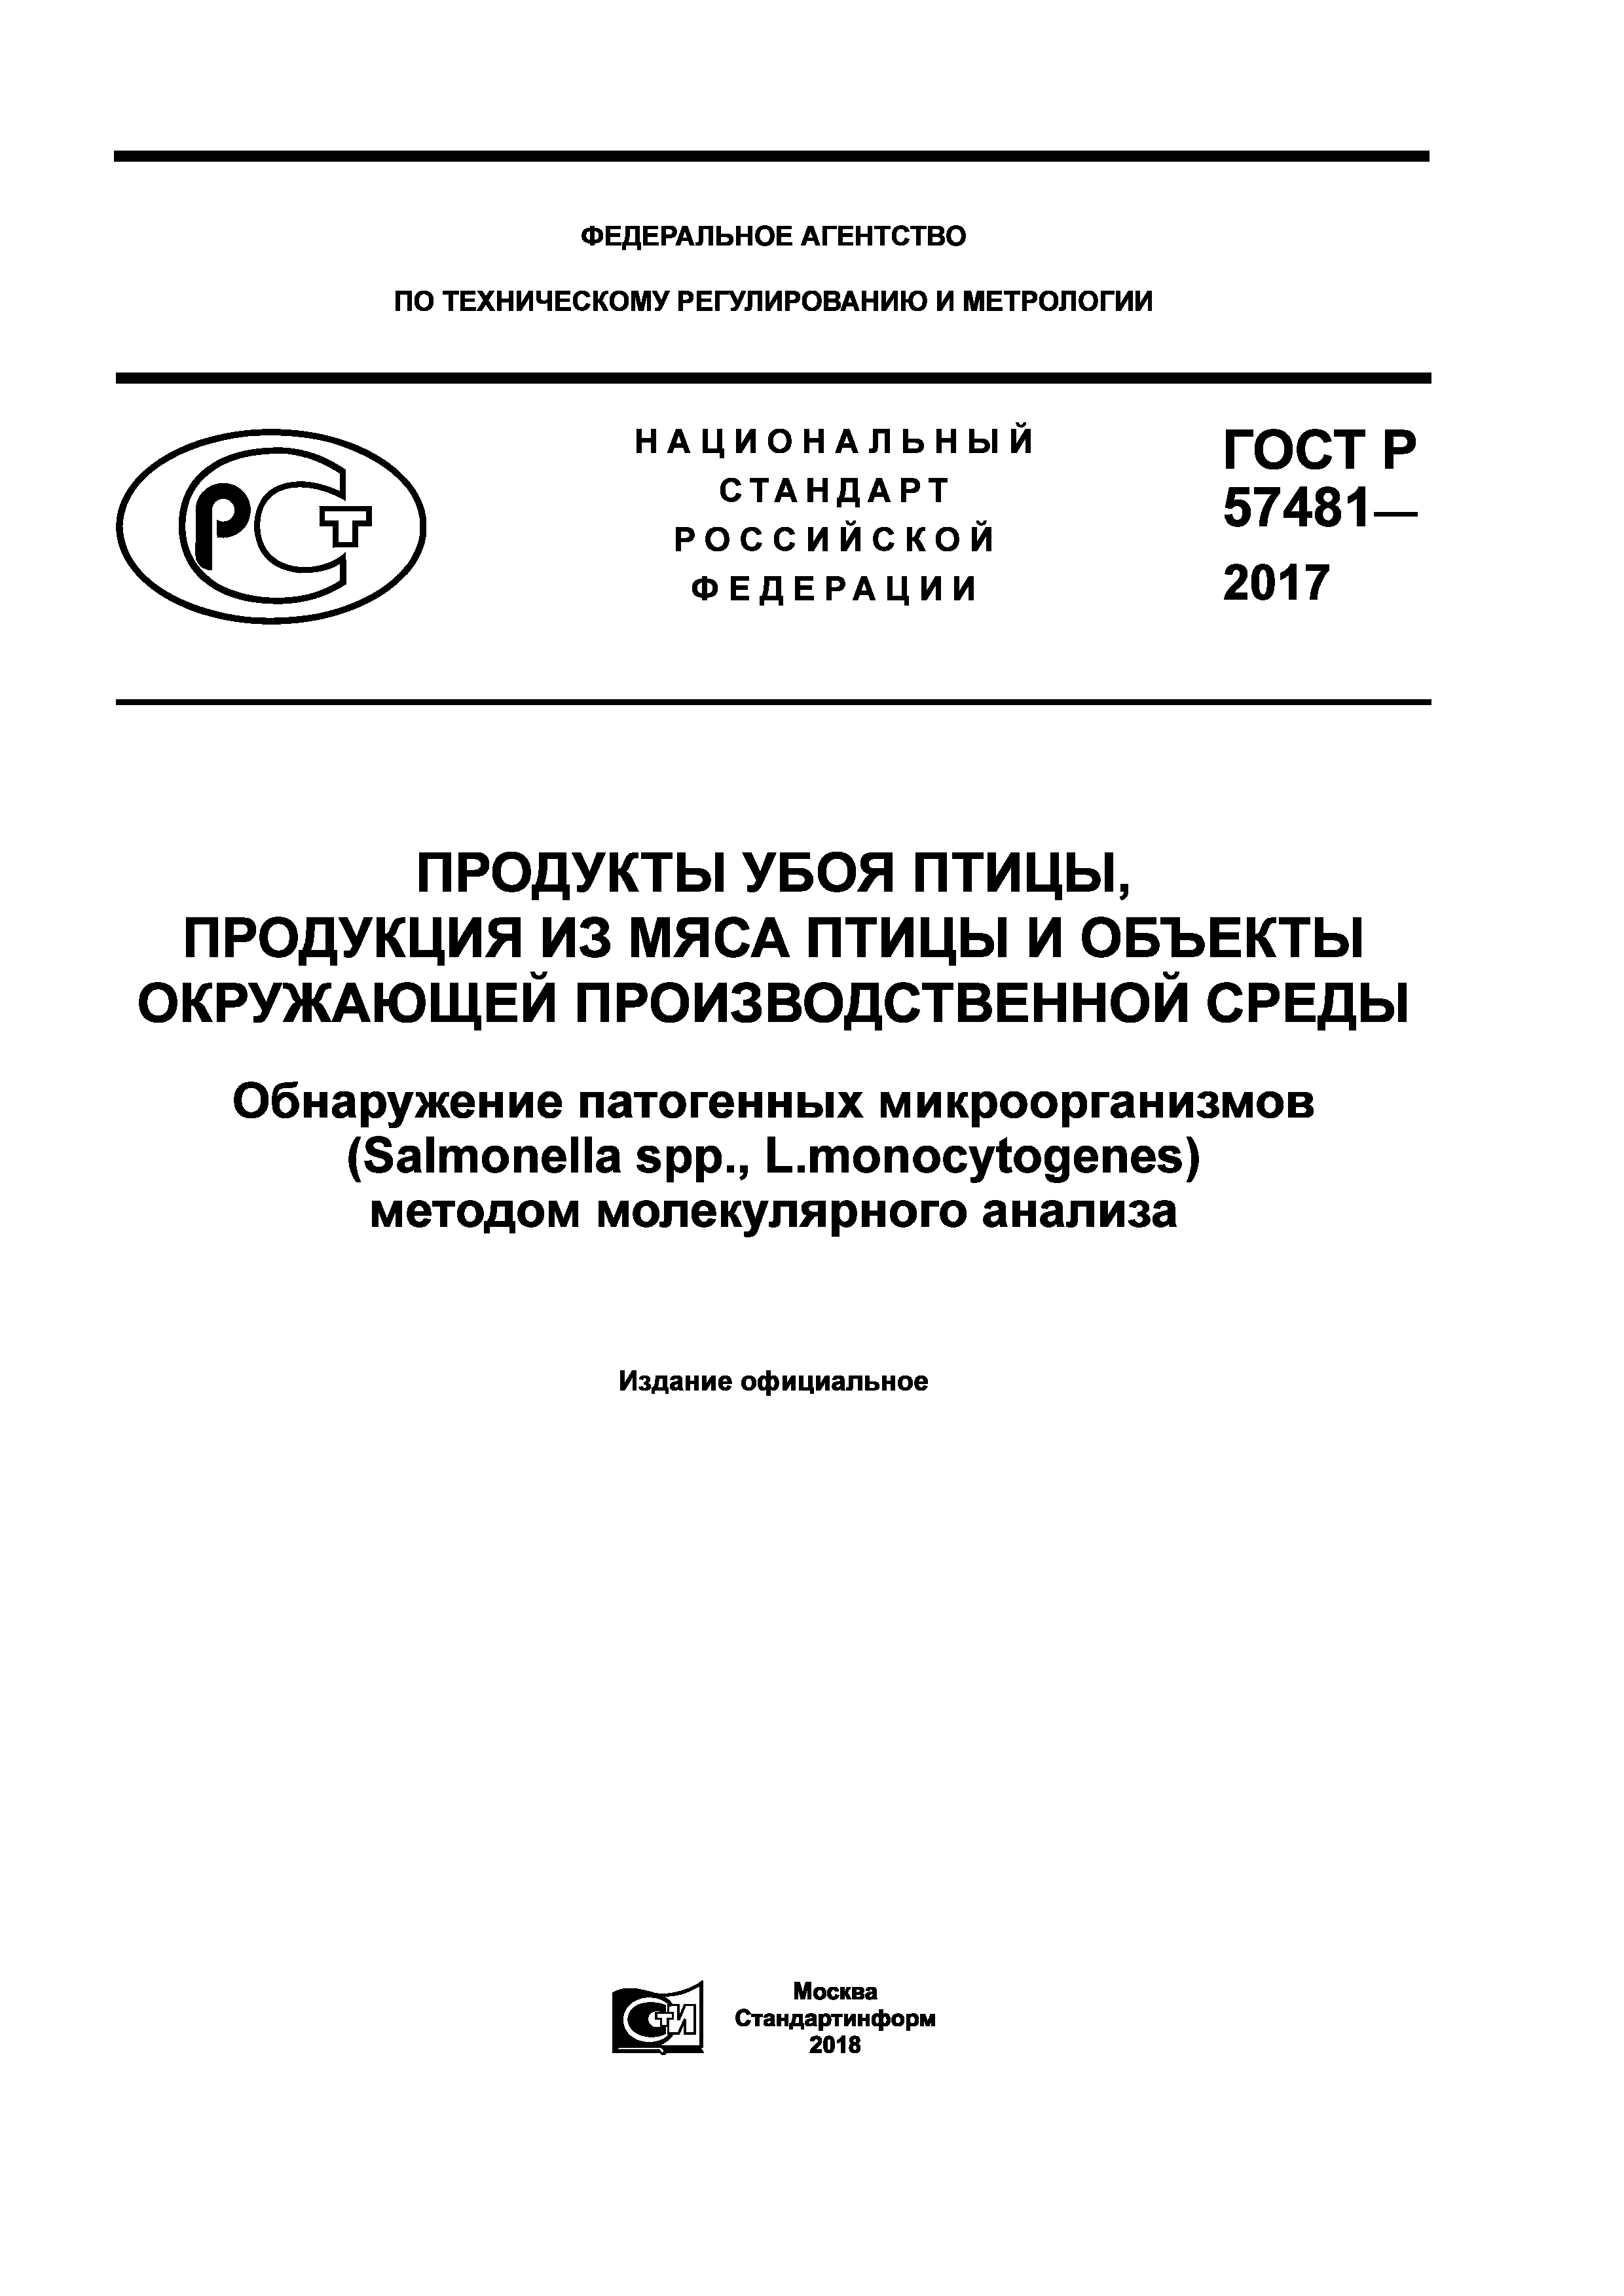 ГОСТ Р 57481-2017